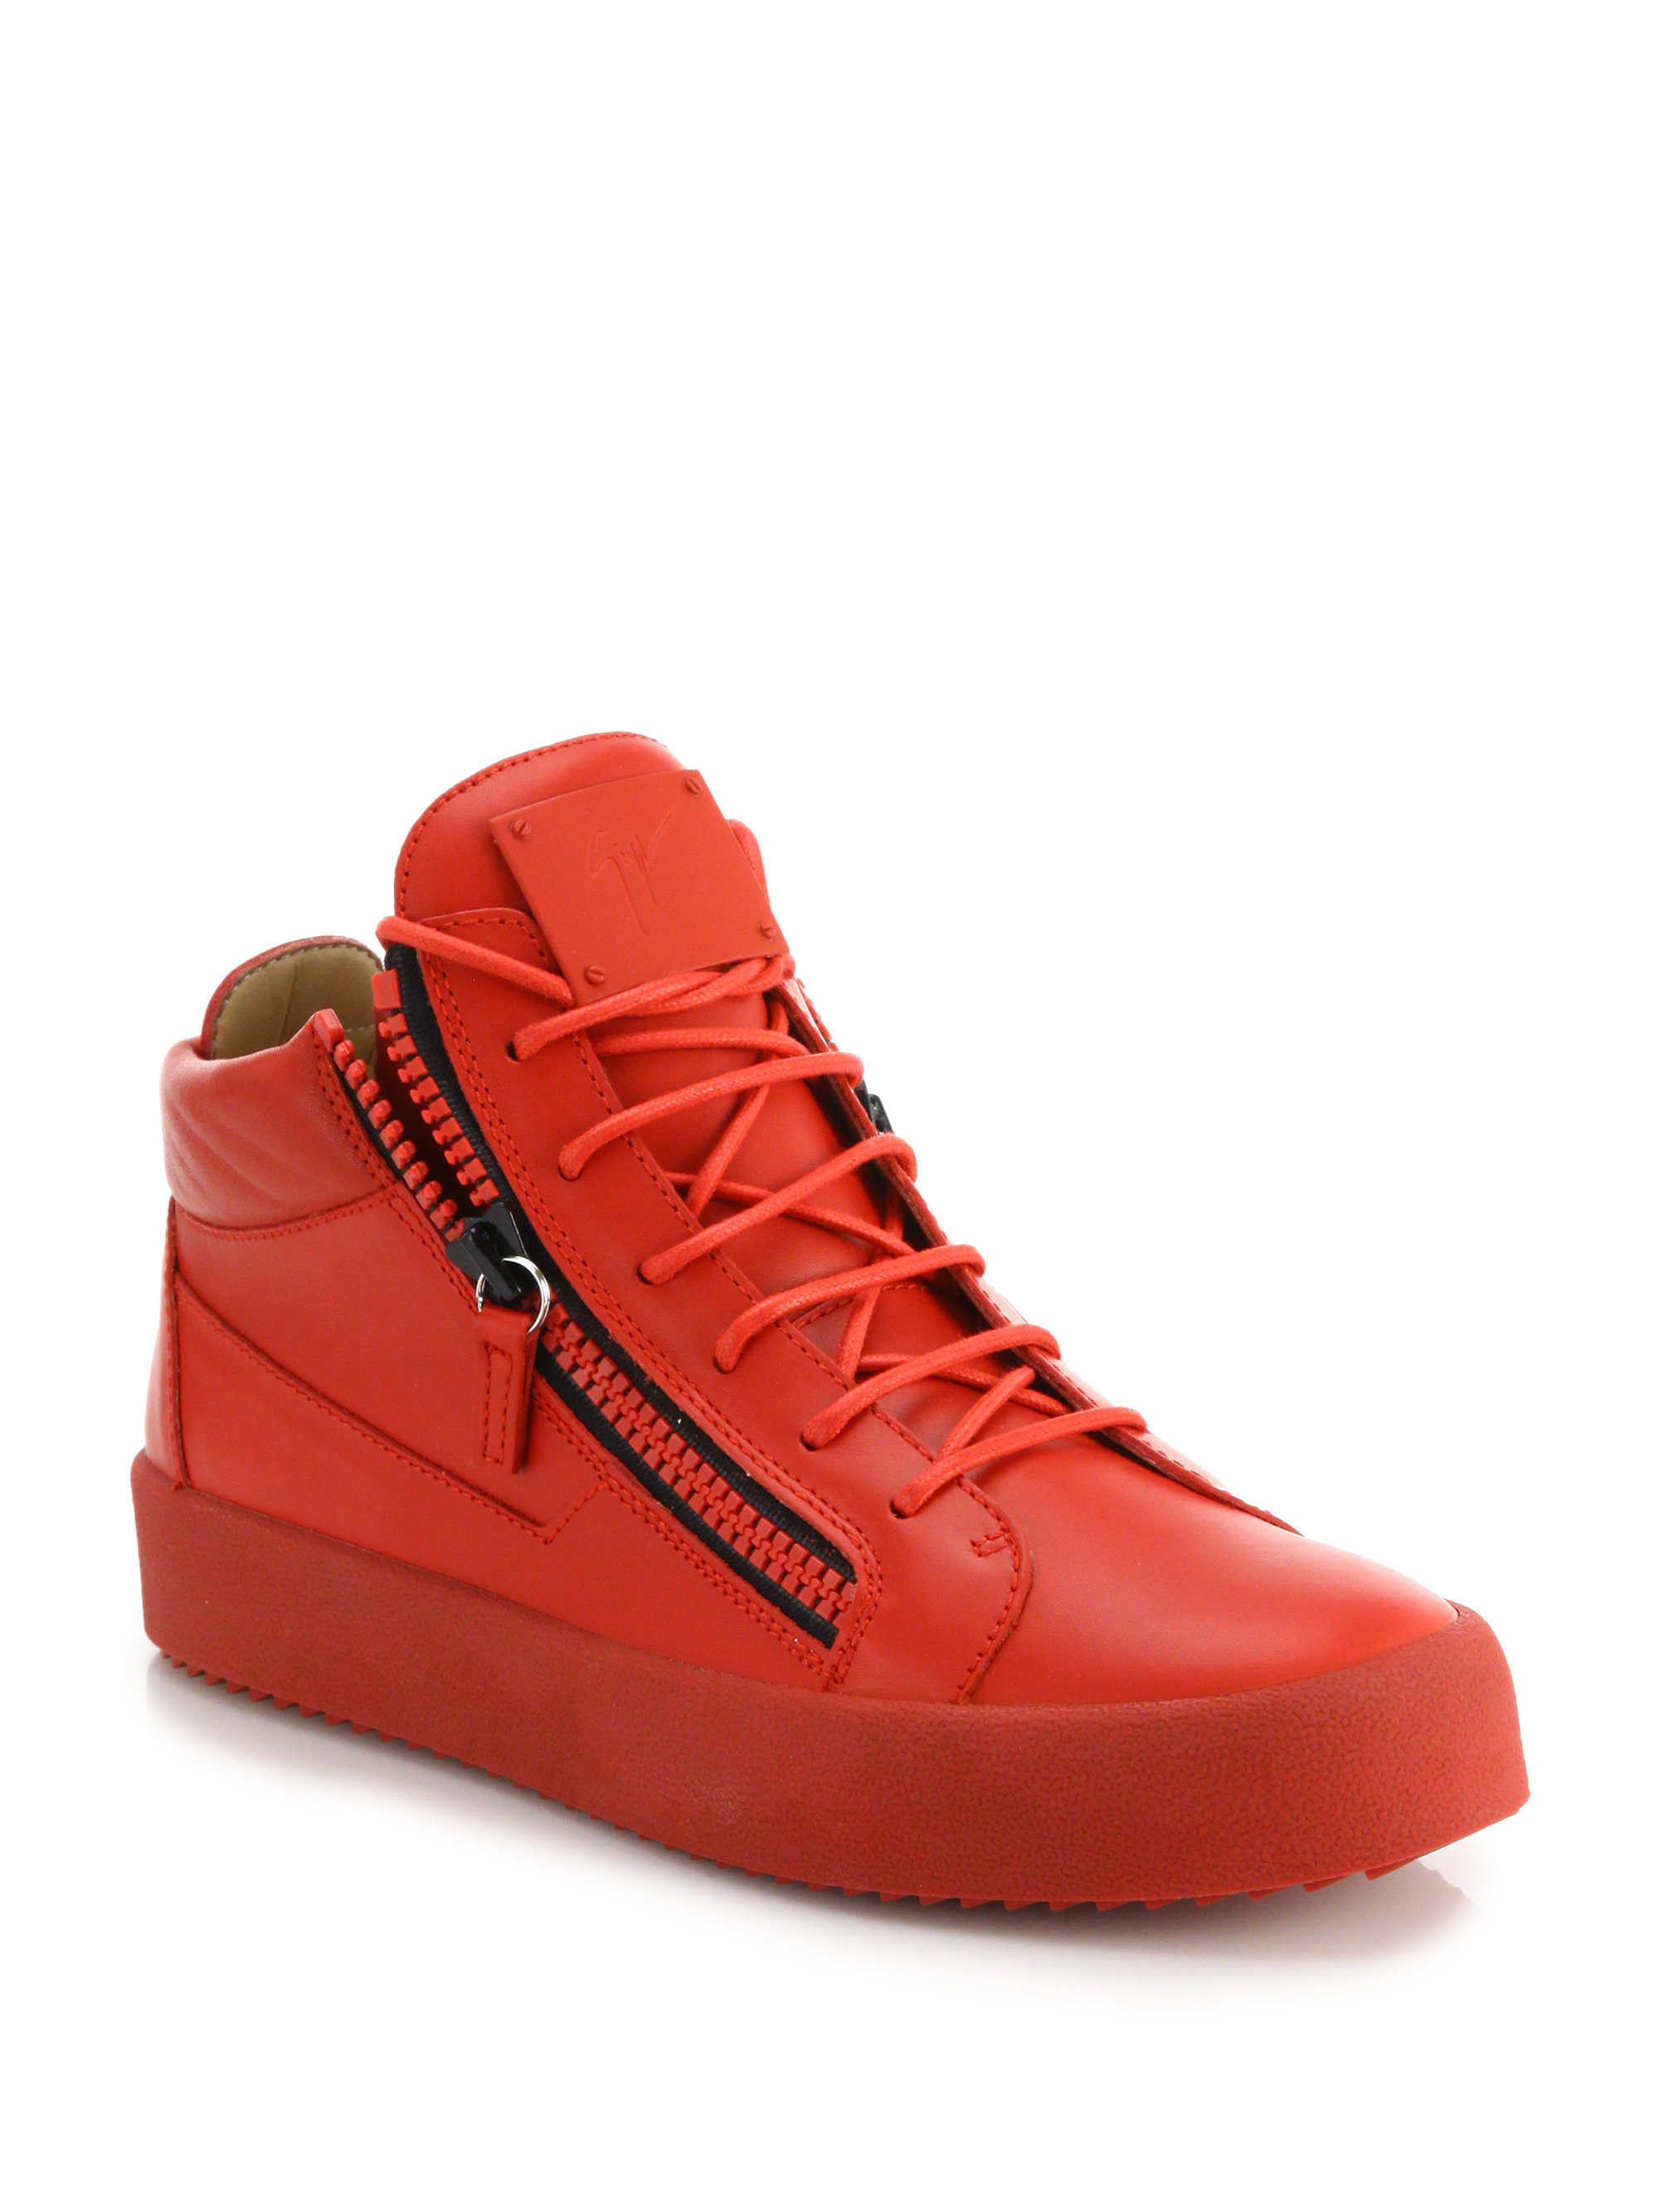 Giuseppe Zanotti Double Zip Mid-rise Sneakers in Red for Men - Lyst